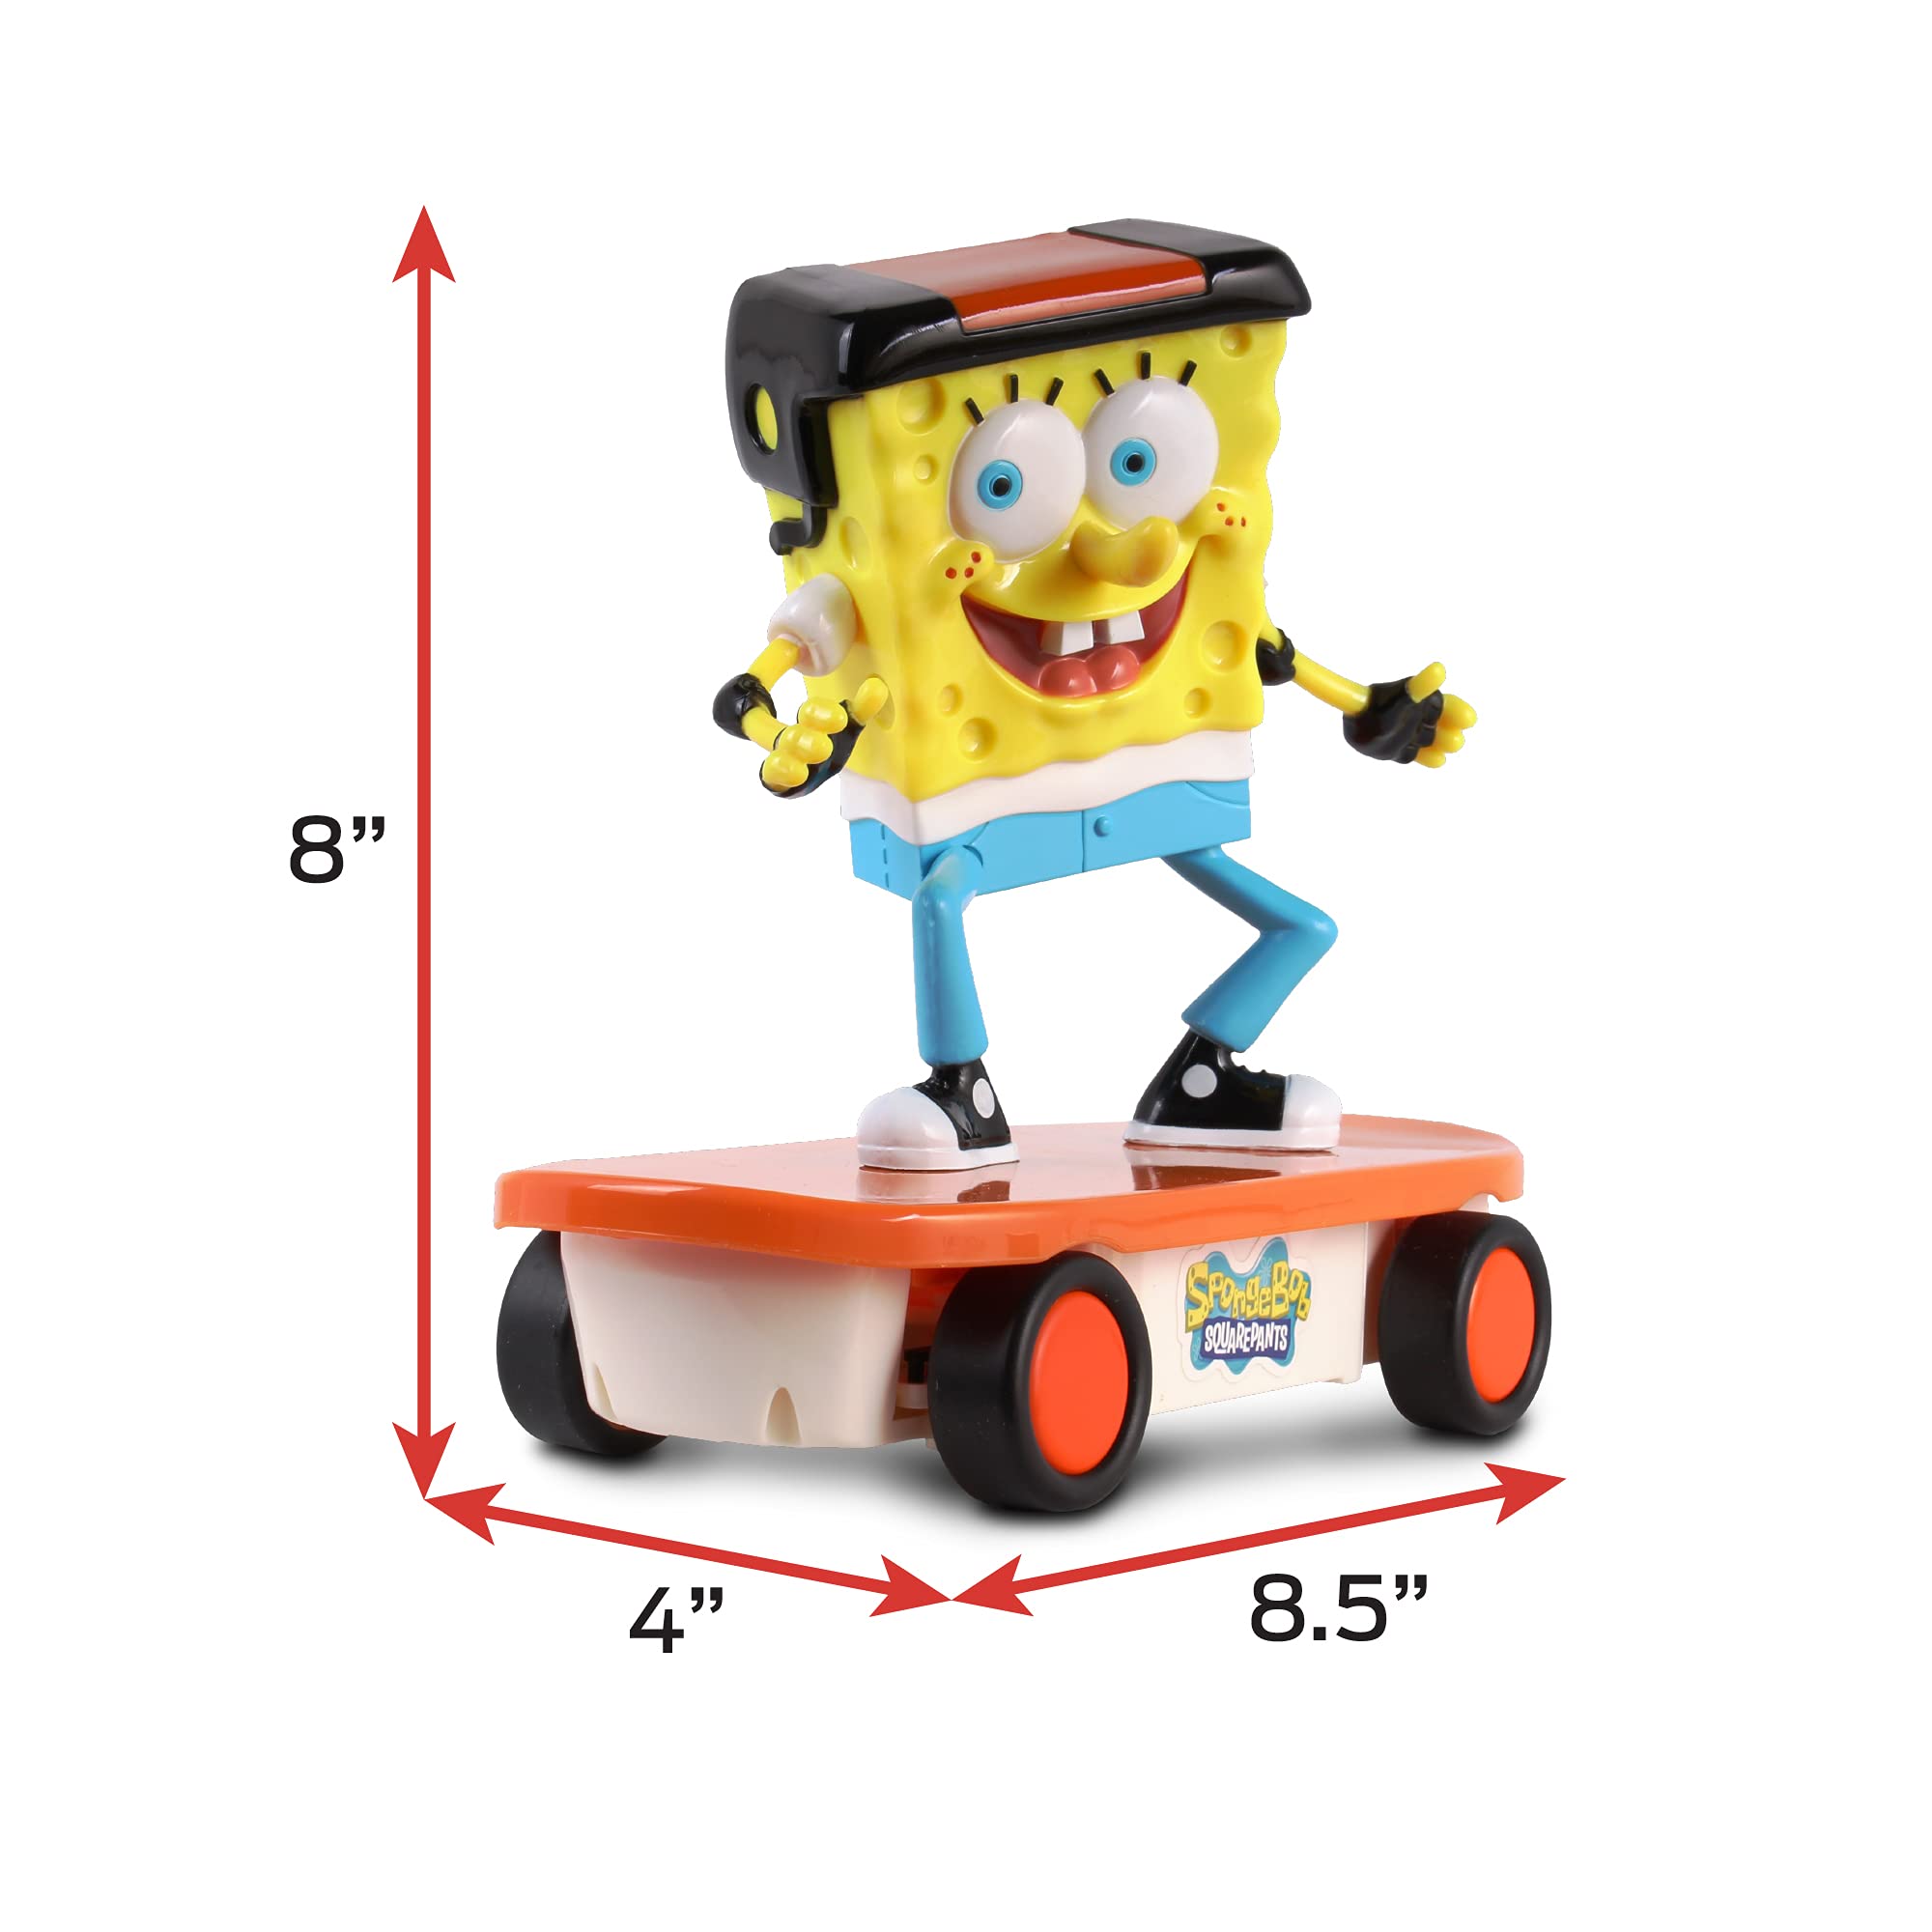 NKOK Spongebob 2.4GHz Skateboarder R/C Vehicle